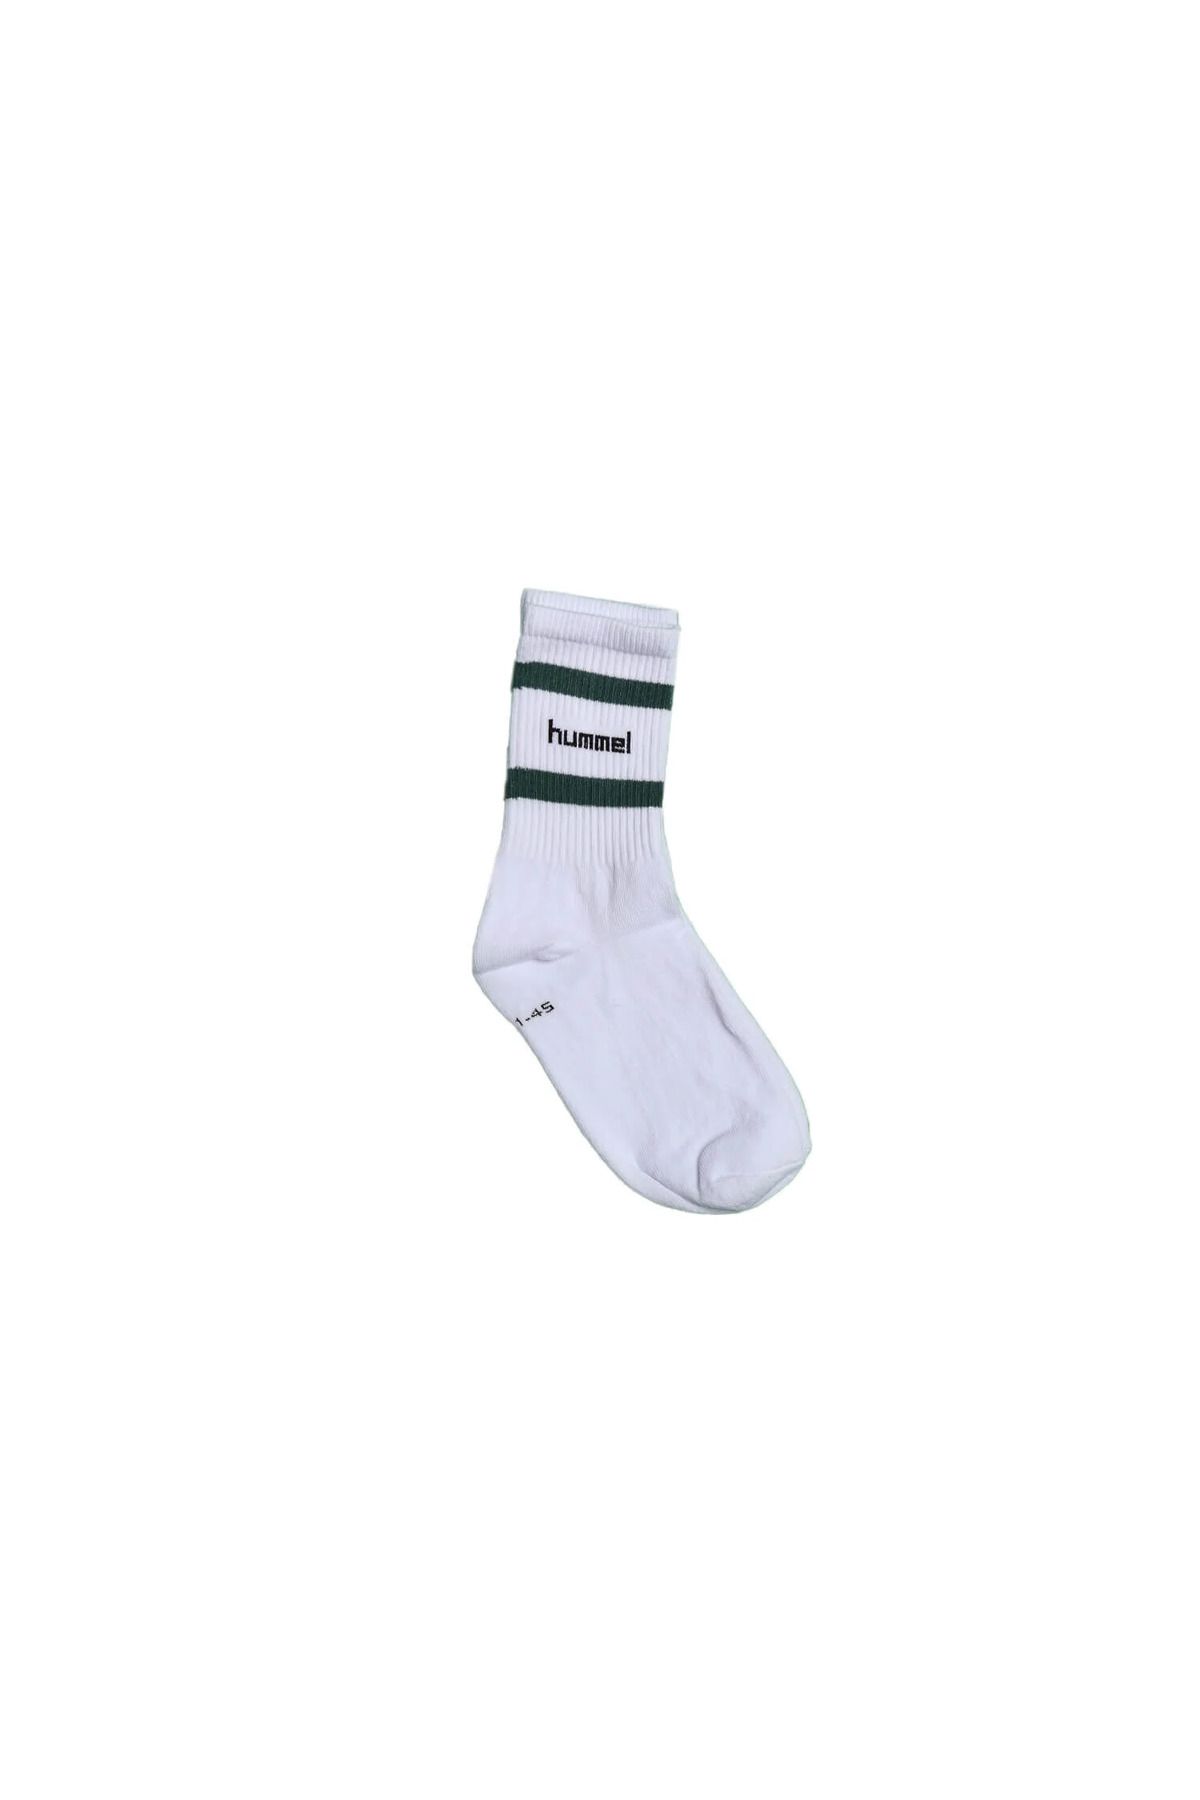 hummel Hmllong Sport 1pk Socks Unısex Çorap 970144-9995 Green/whıte